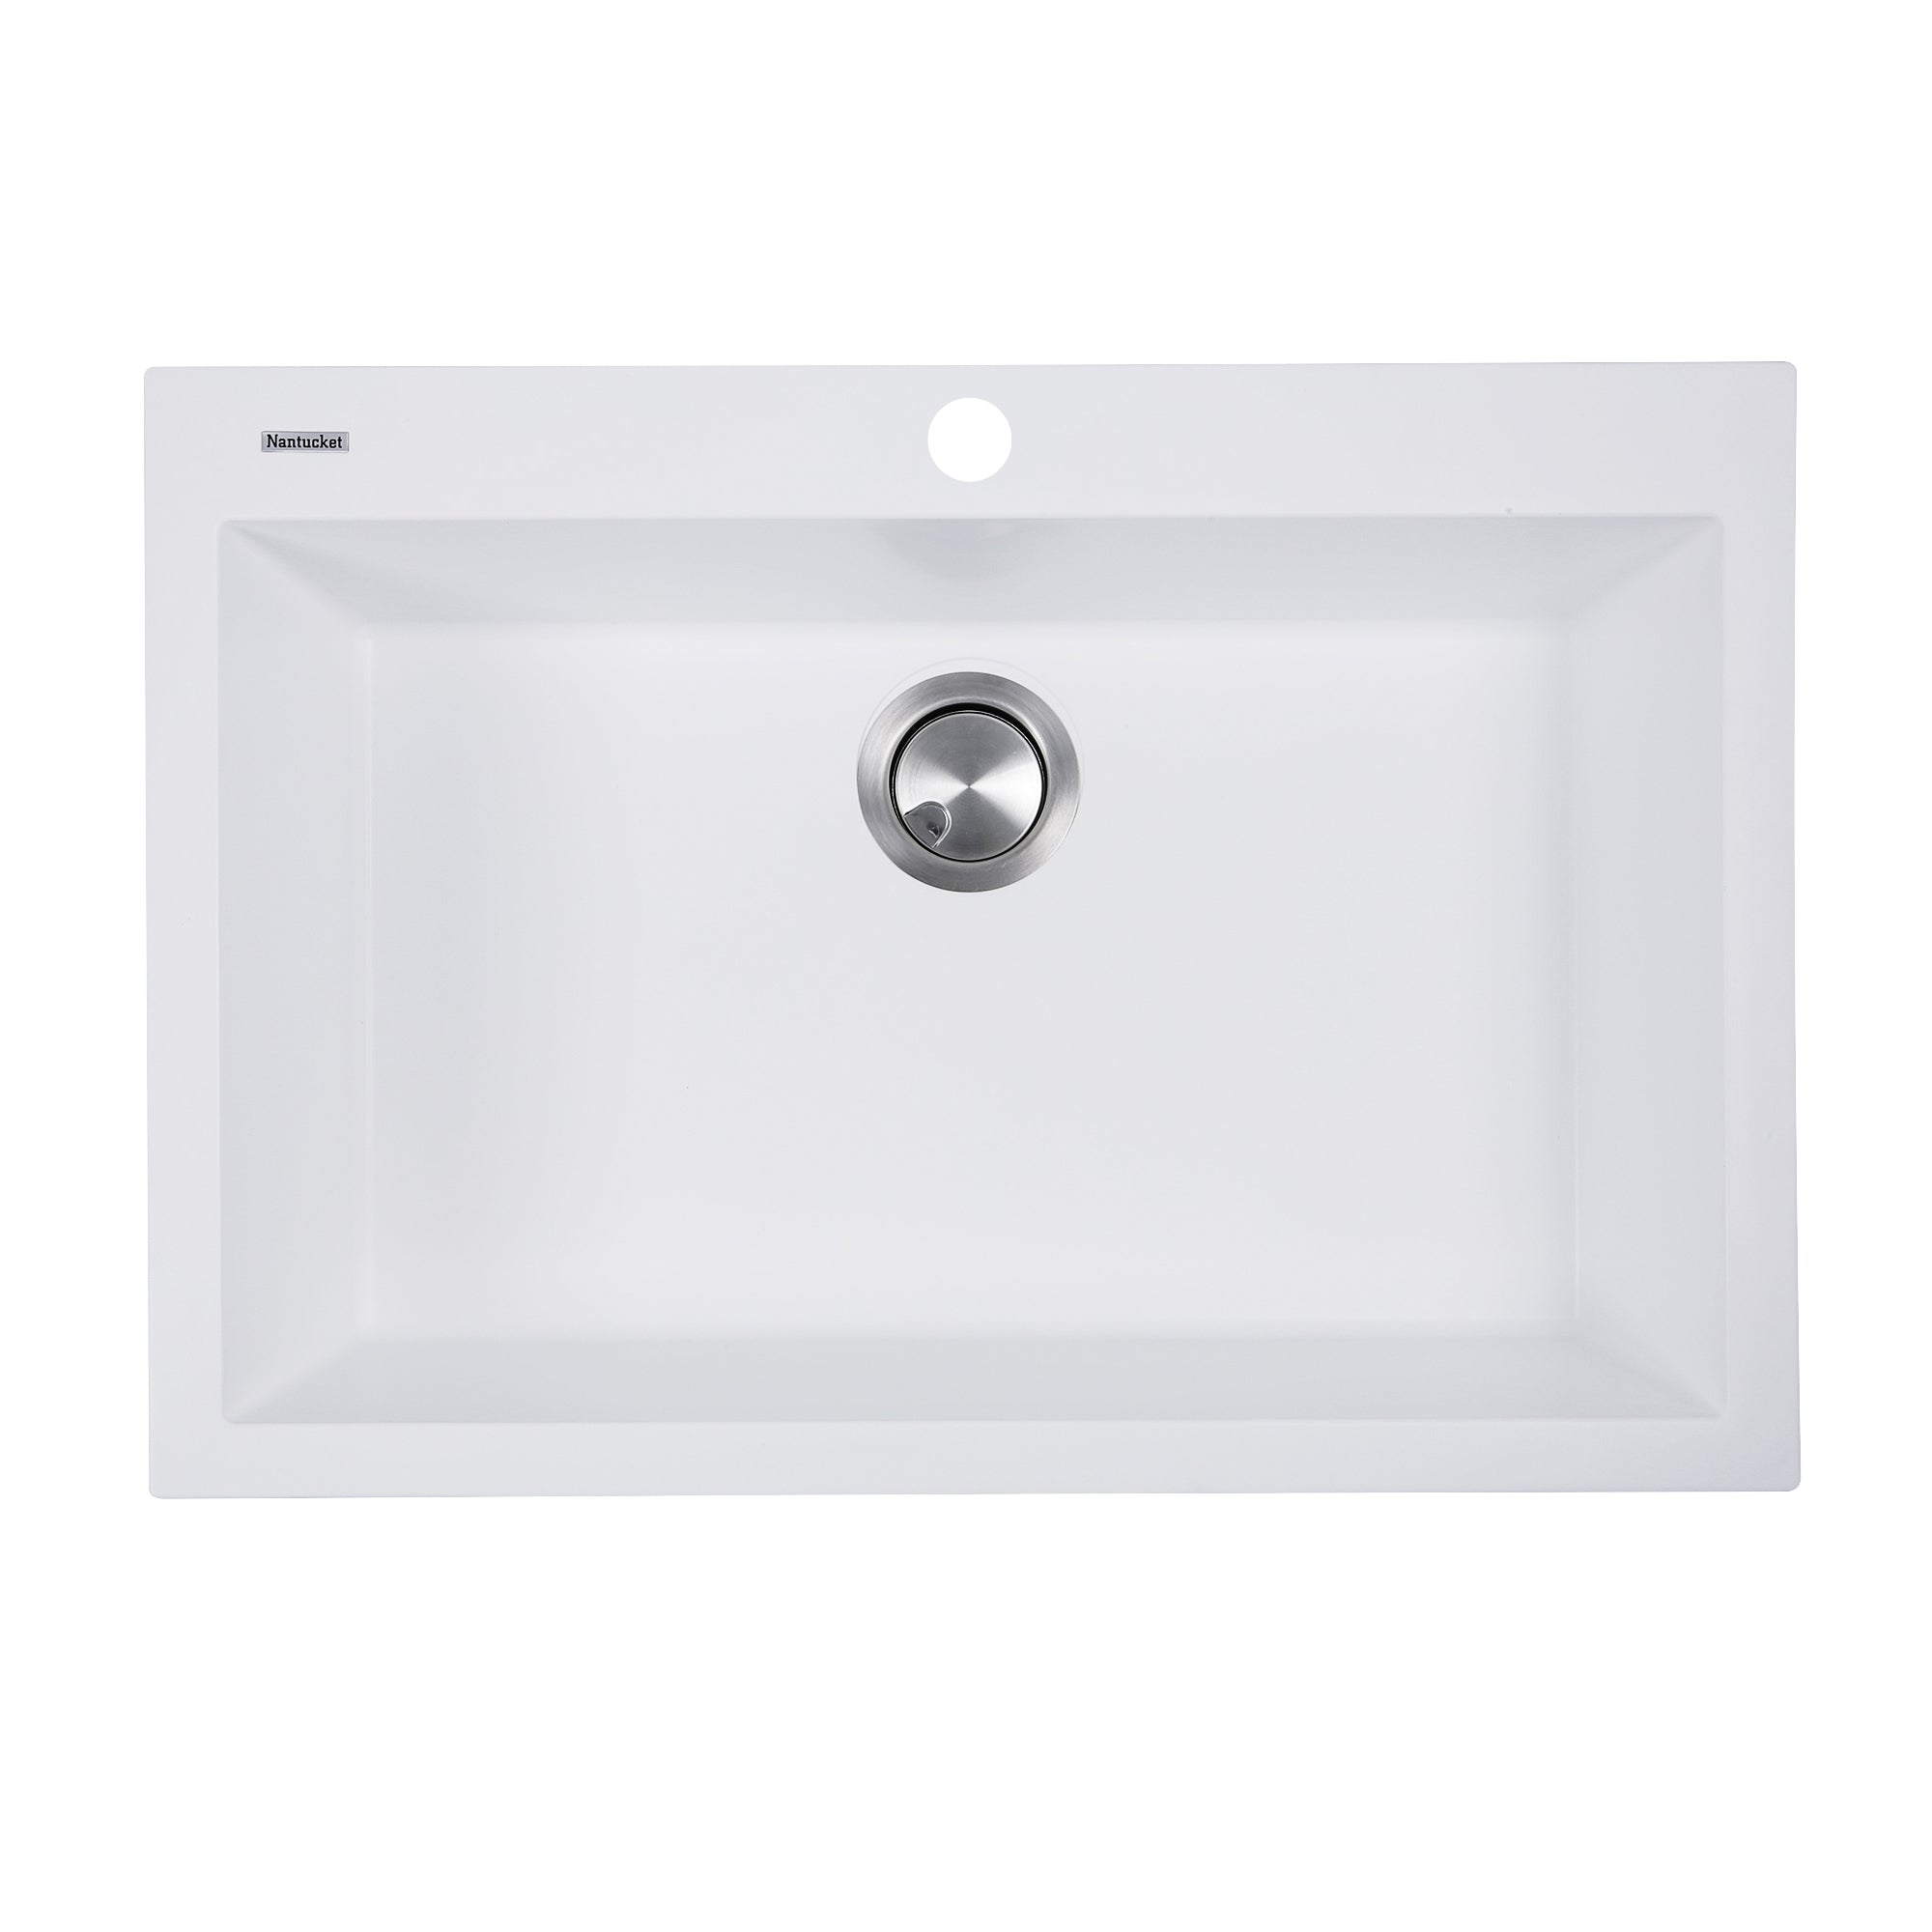 Nantuket Sinks 27 inch Single Bowl Dualmount Granite Composite Kitchen Sink